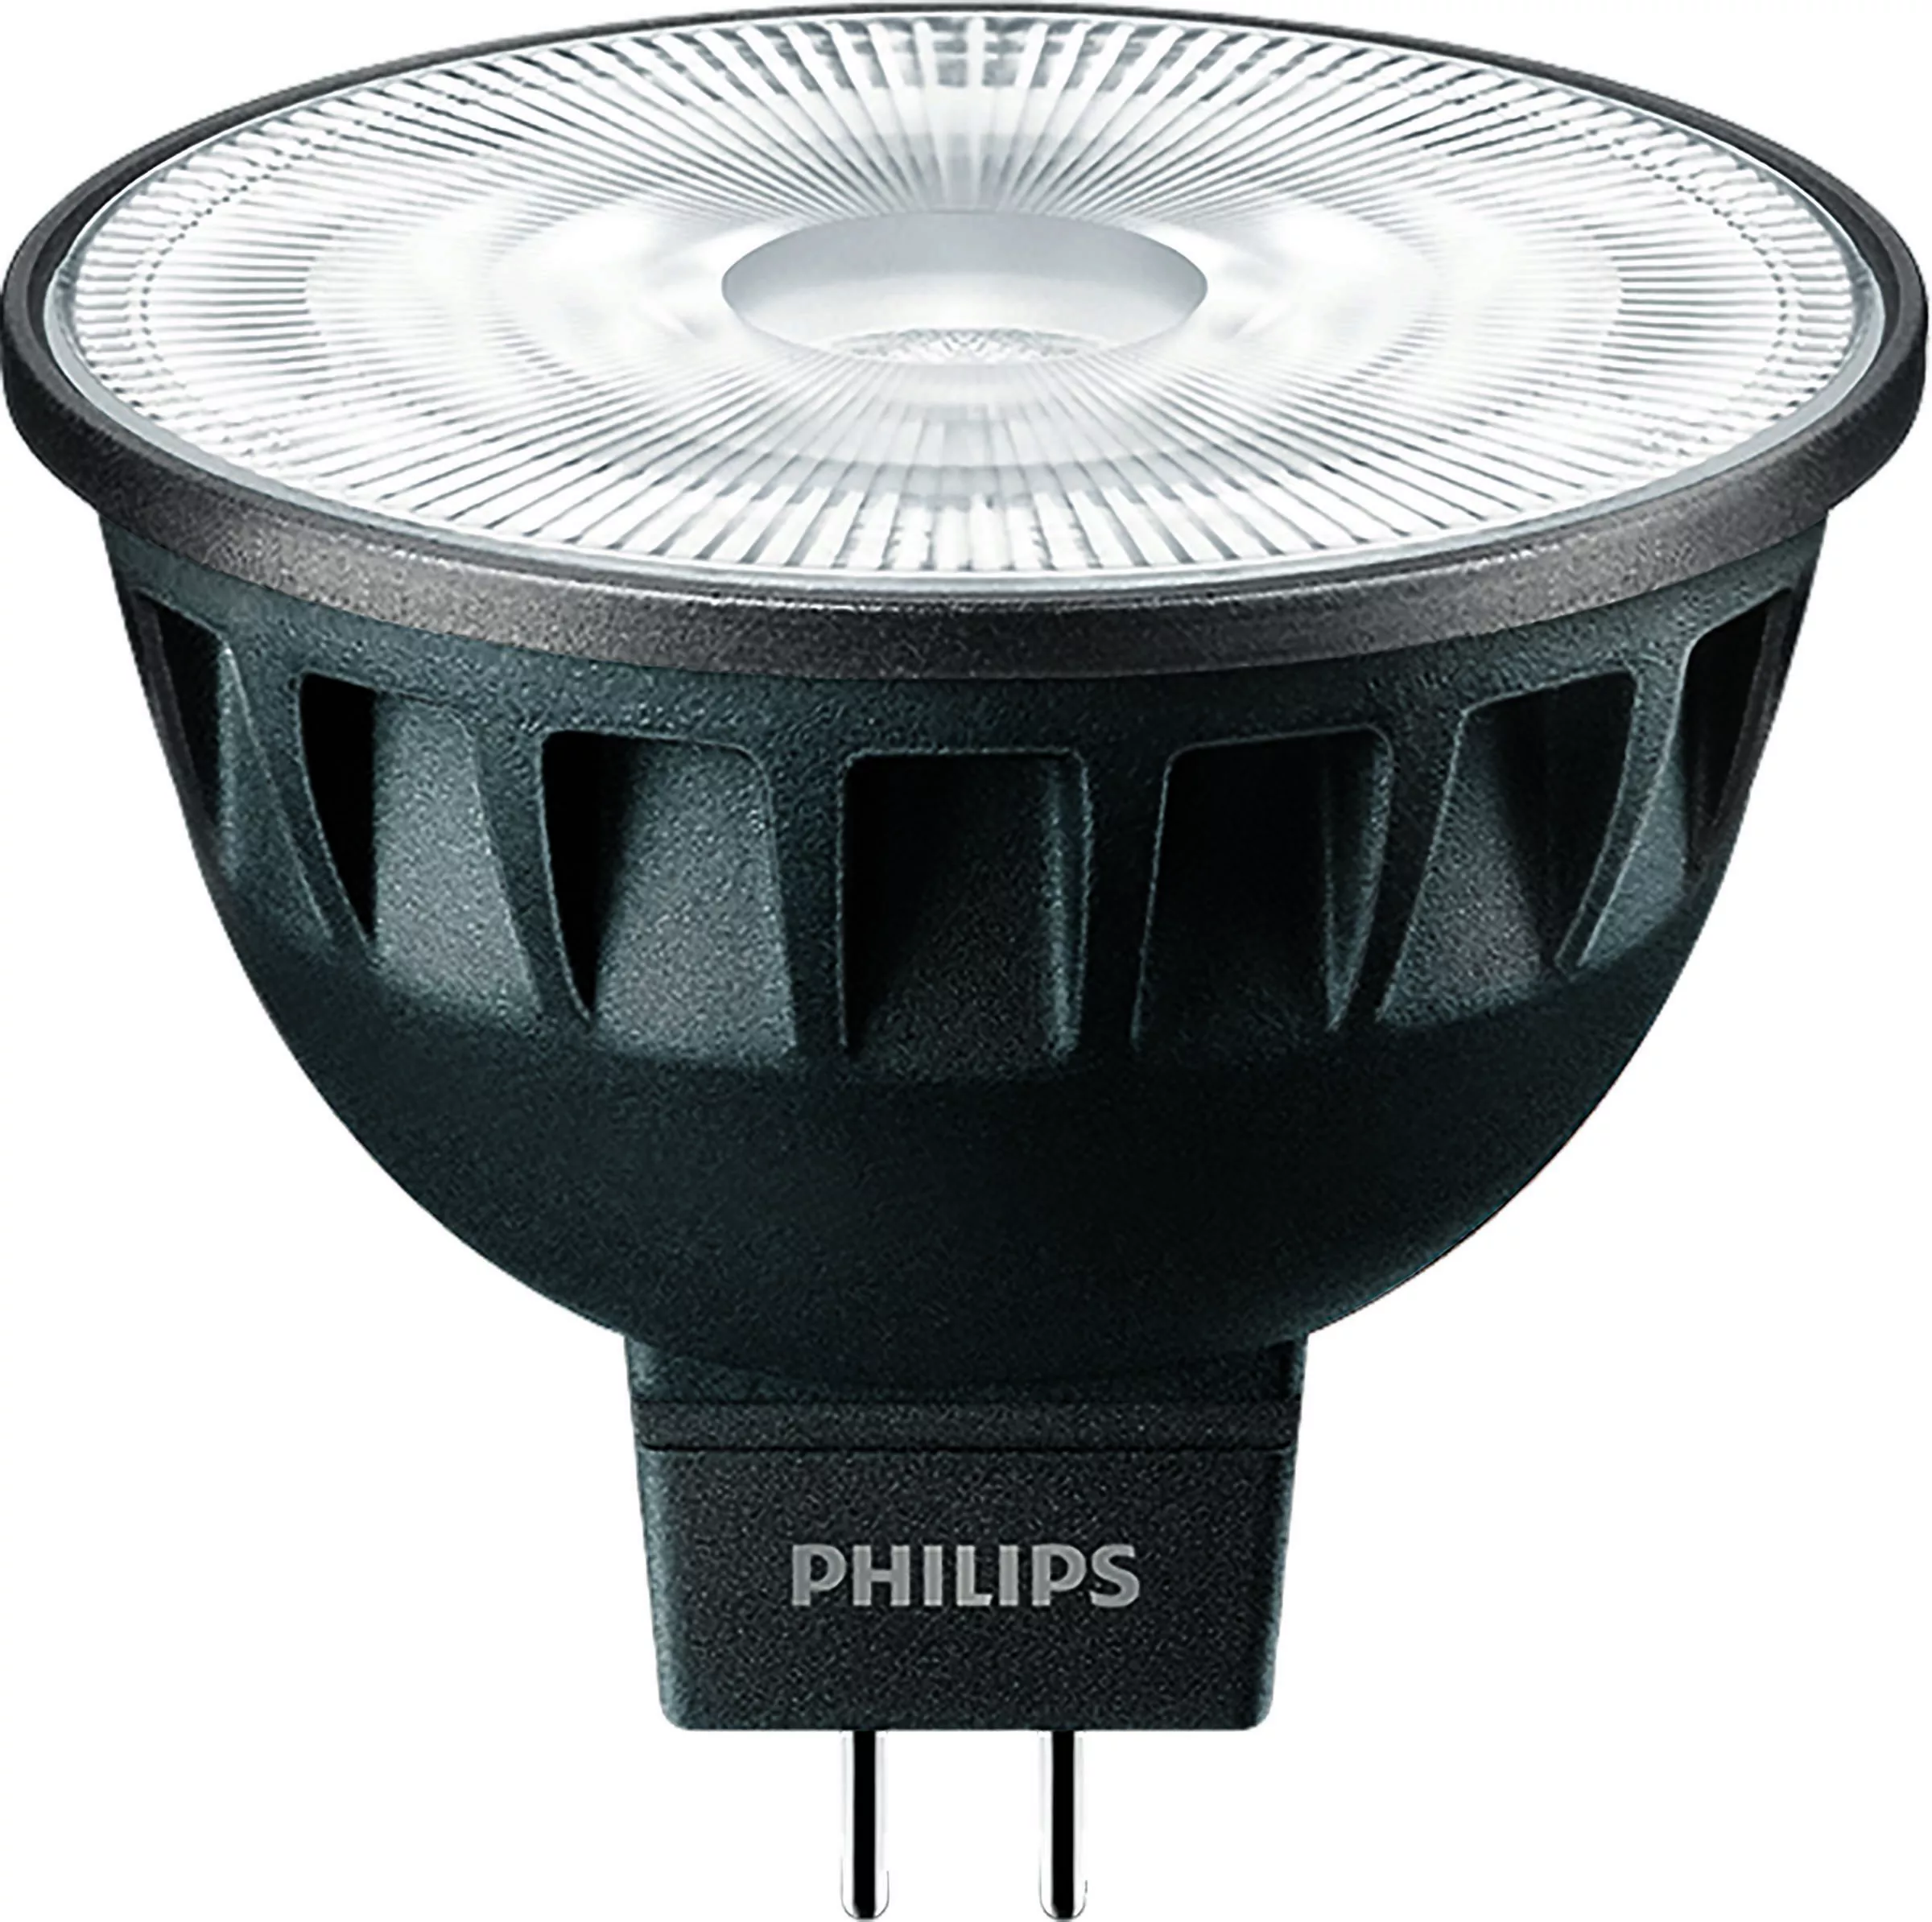 Philips Lighting LED-Reflektorlampr MR16 GU5.3 930 DIM MAS LED Exp#35861400 günstig online kaufen